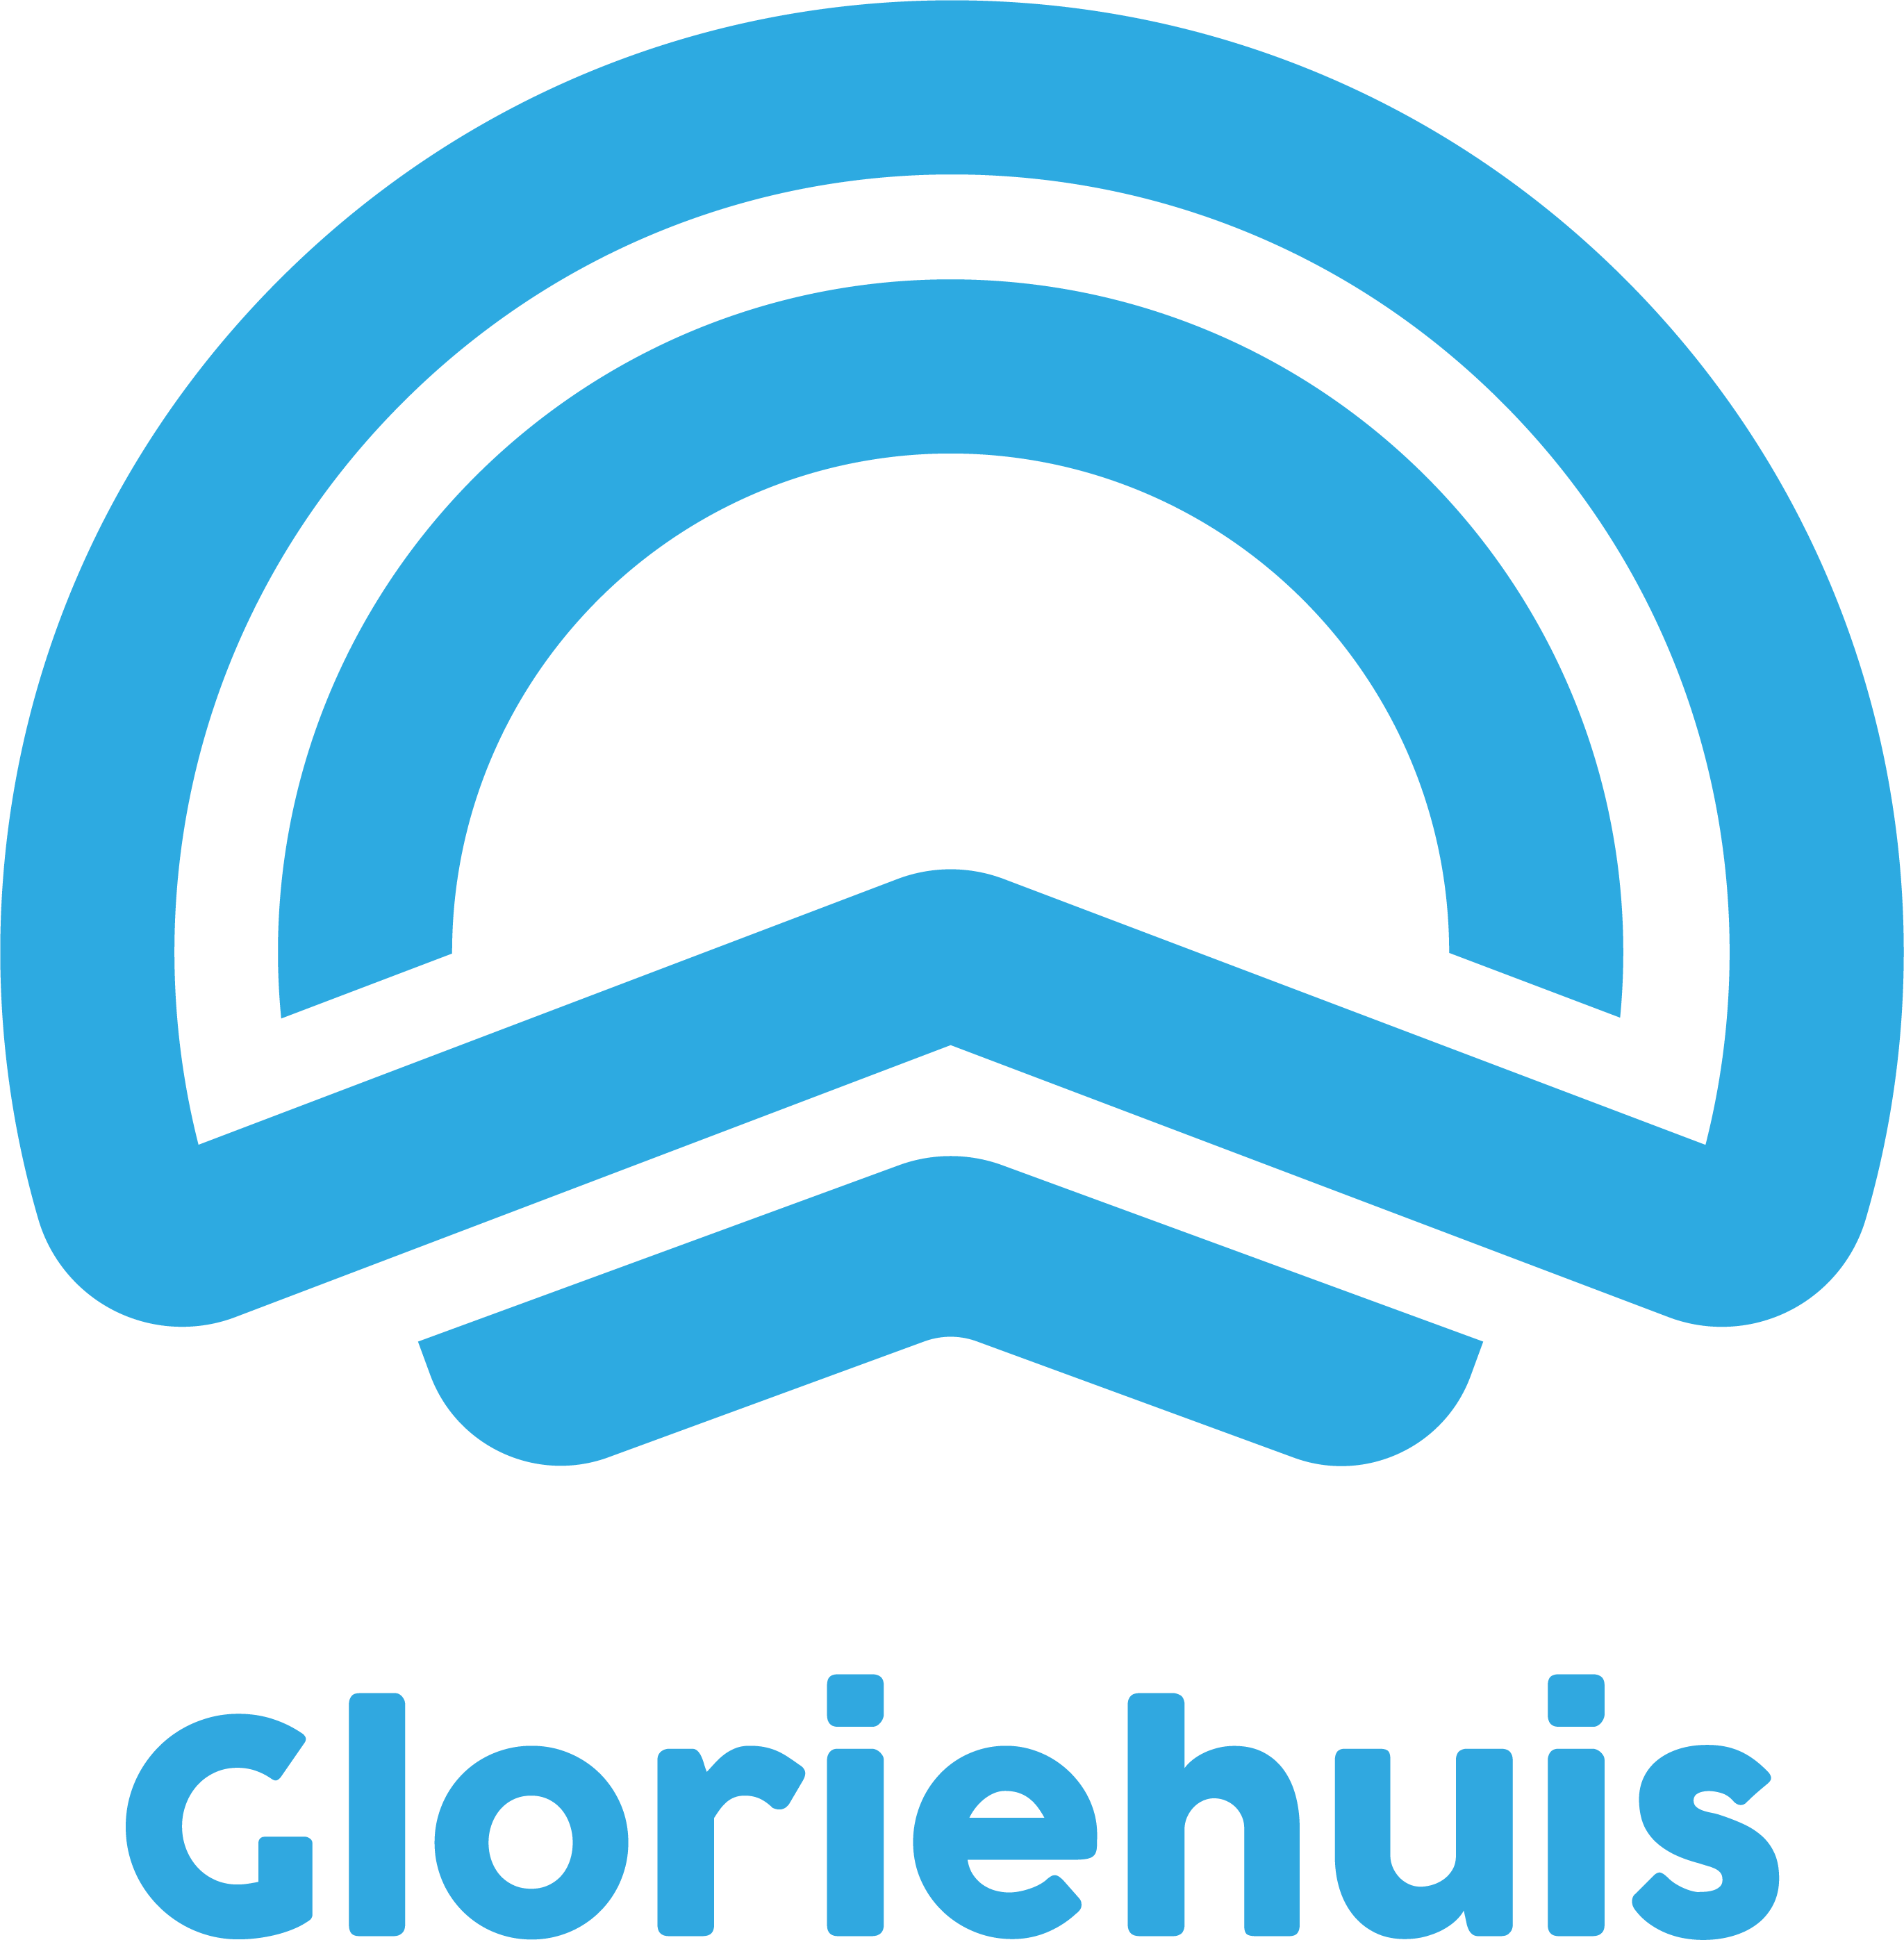 Gloriehuis Bolsward Logo